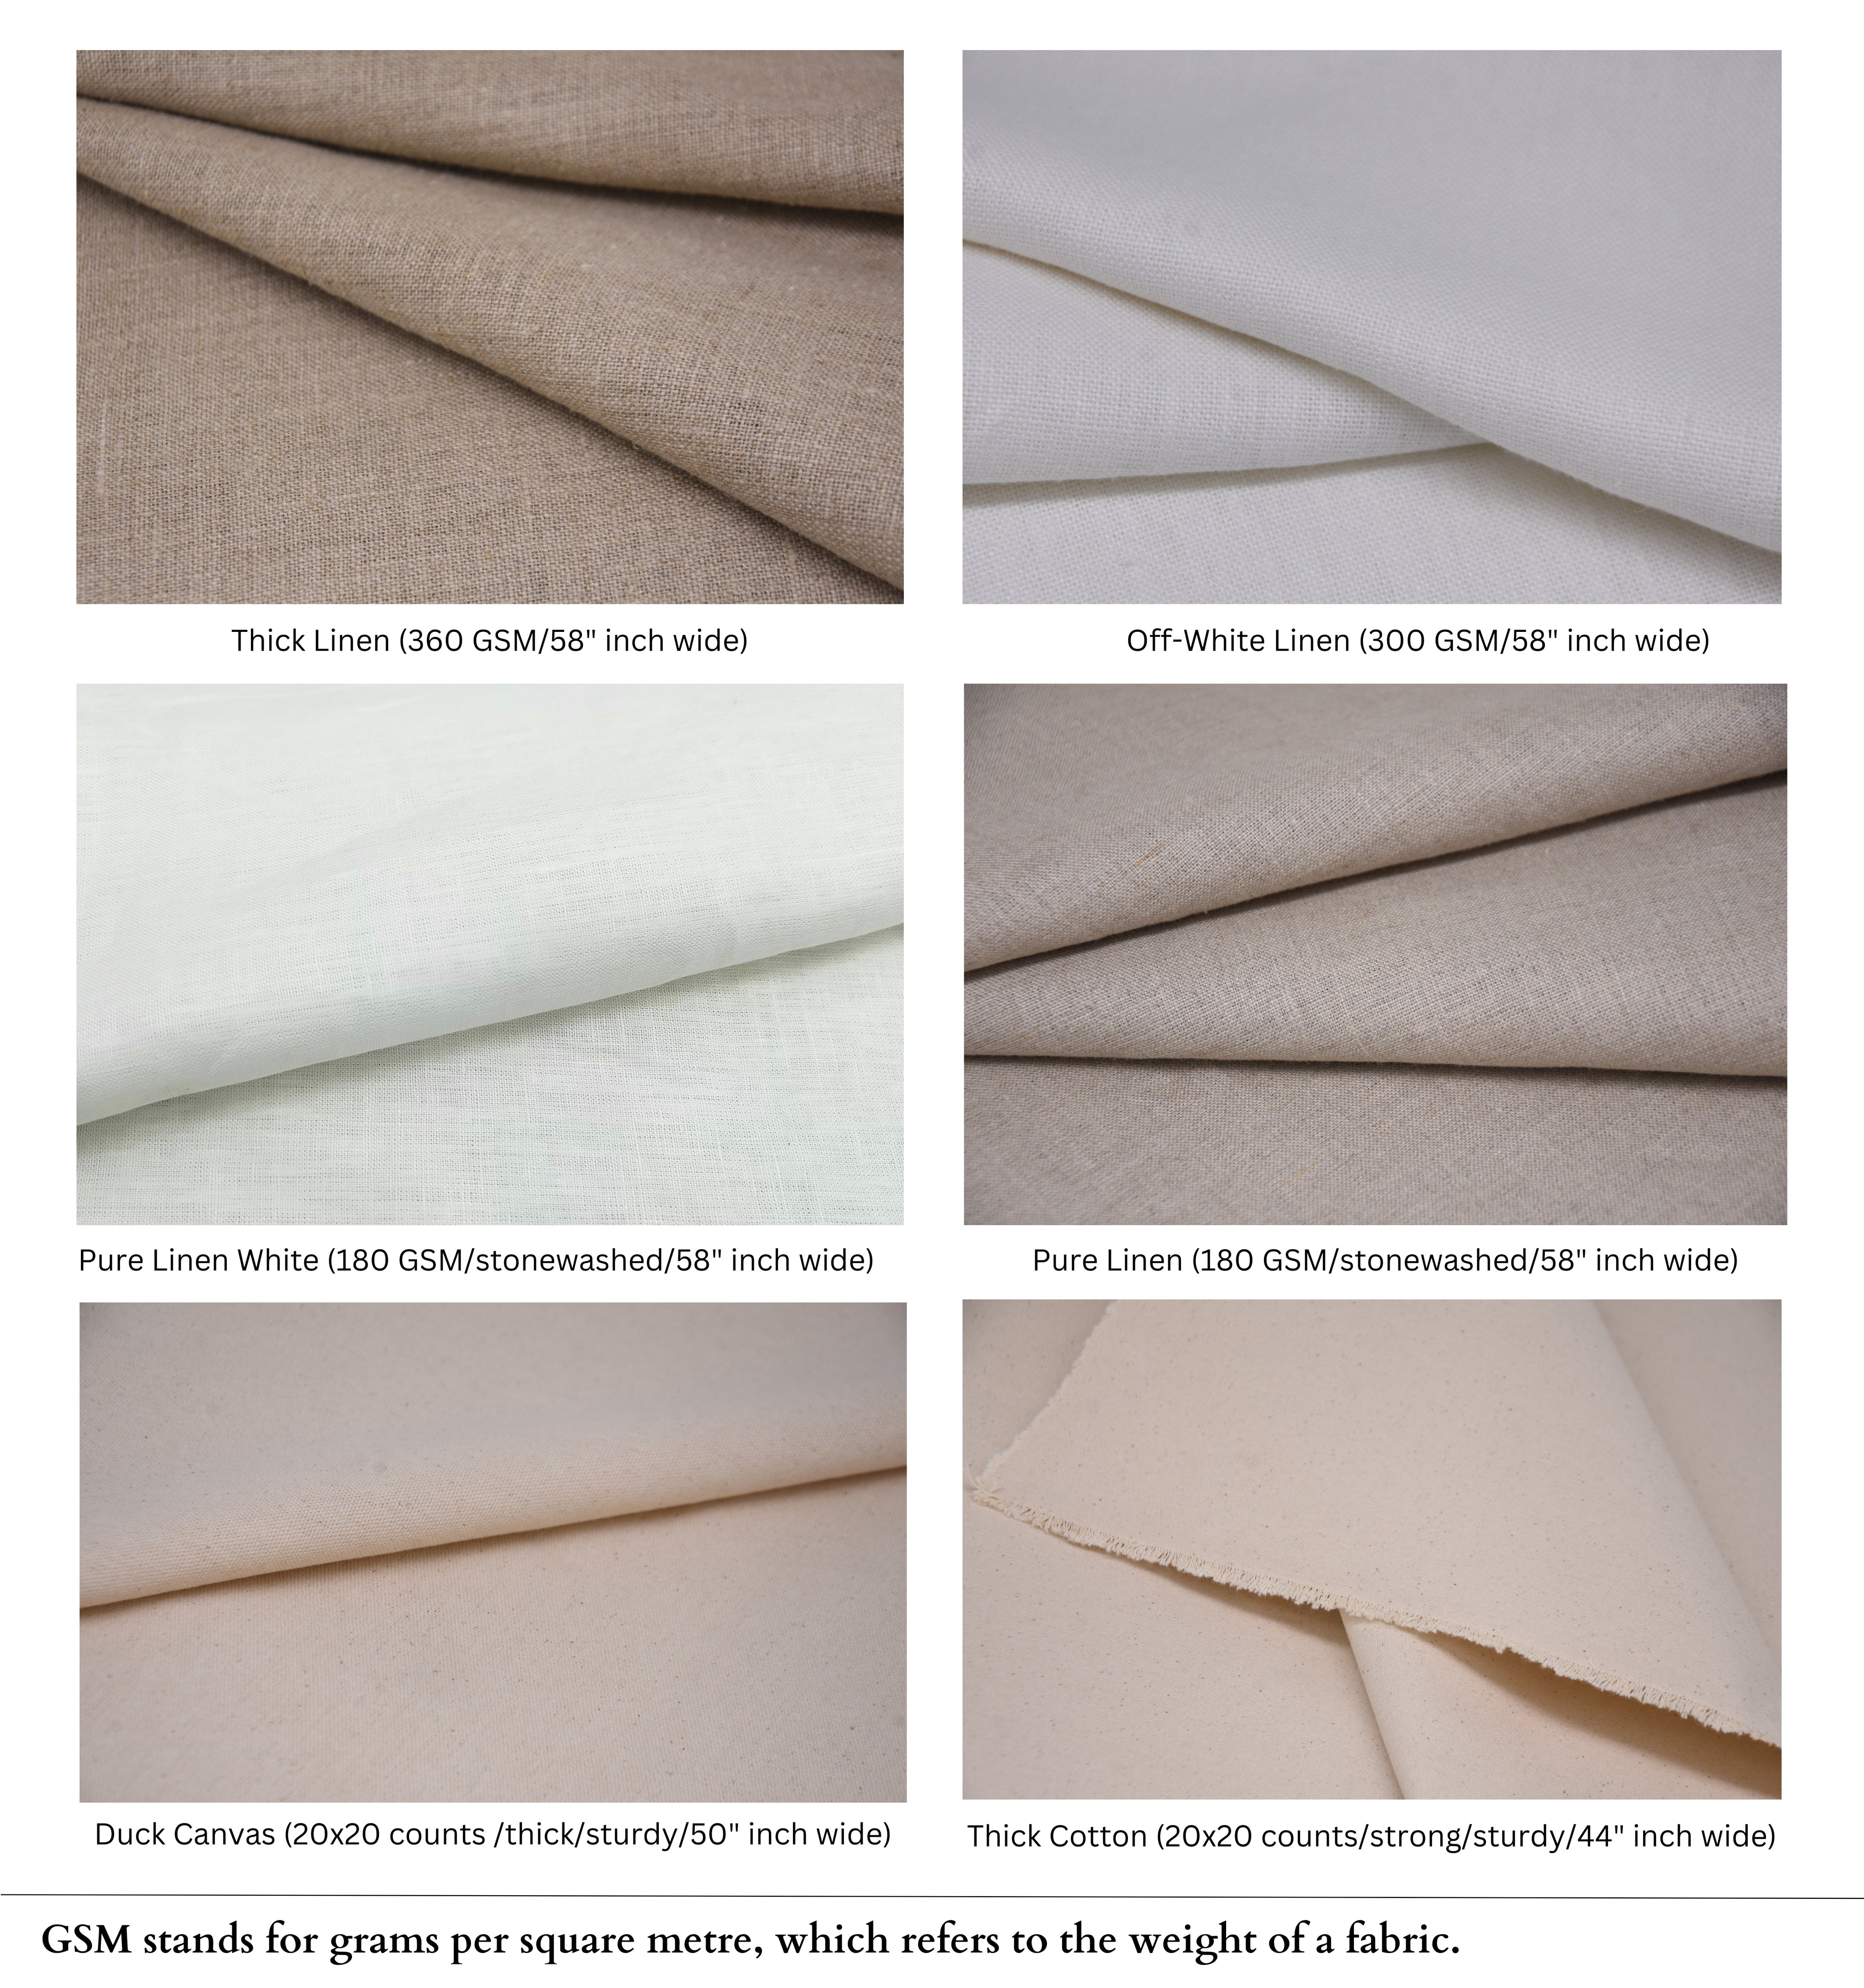 Block Print Linen Fabric, Sudarshan  Indain Hand Block, Linen Running Fabric  Block Print Fabric For Upholstery, Linen Pillow Cases Sofa Cushion